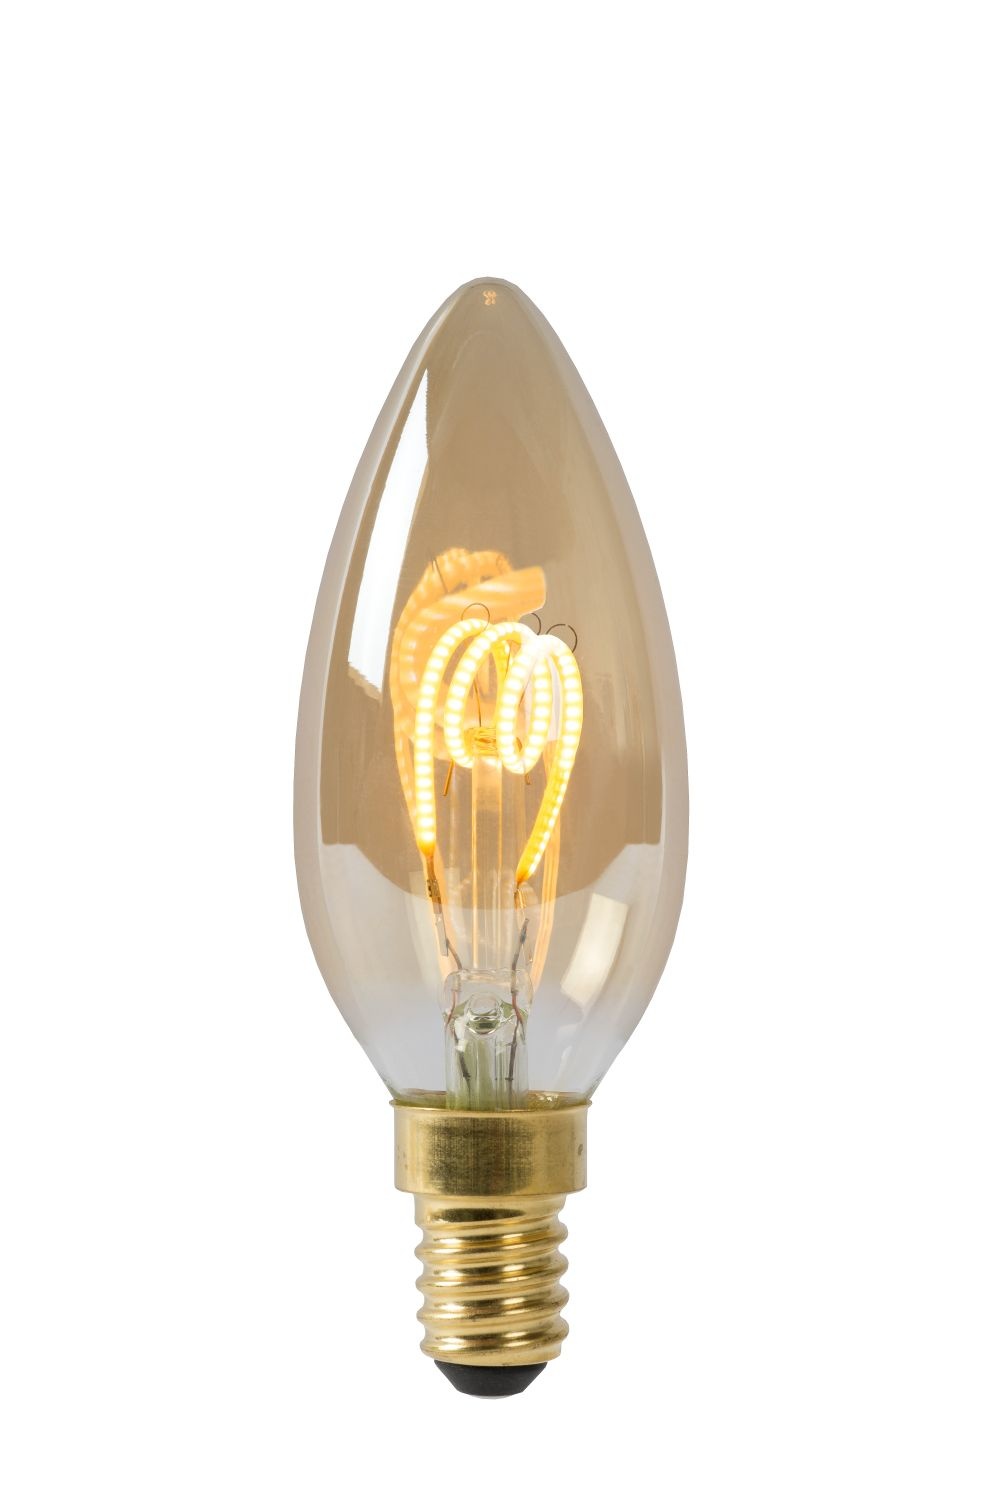 lamp LED 3W 2200K Amber Luxar.nl